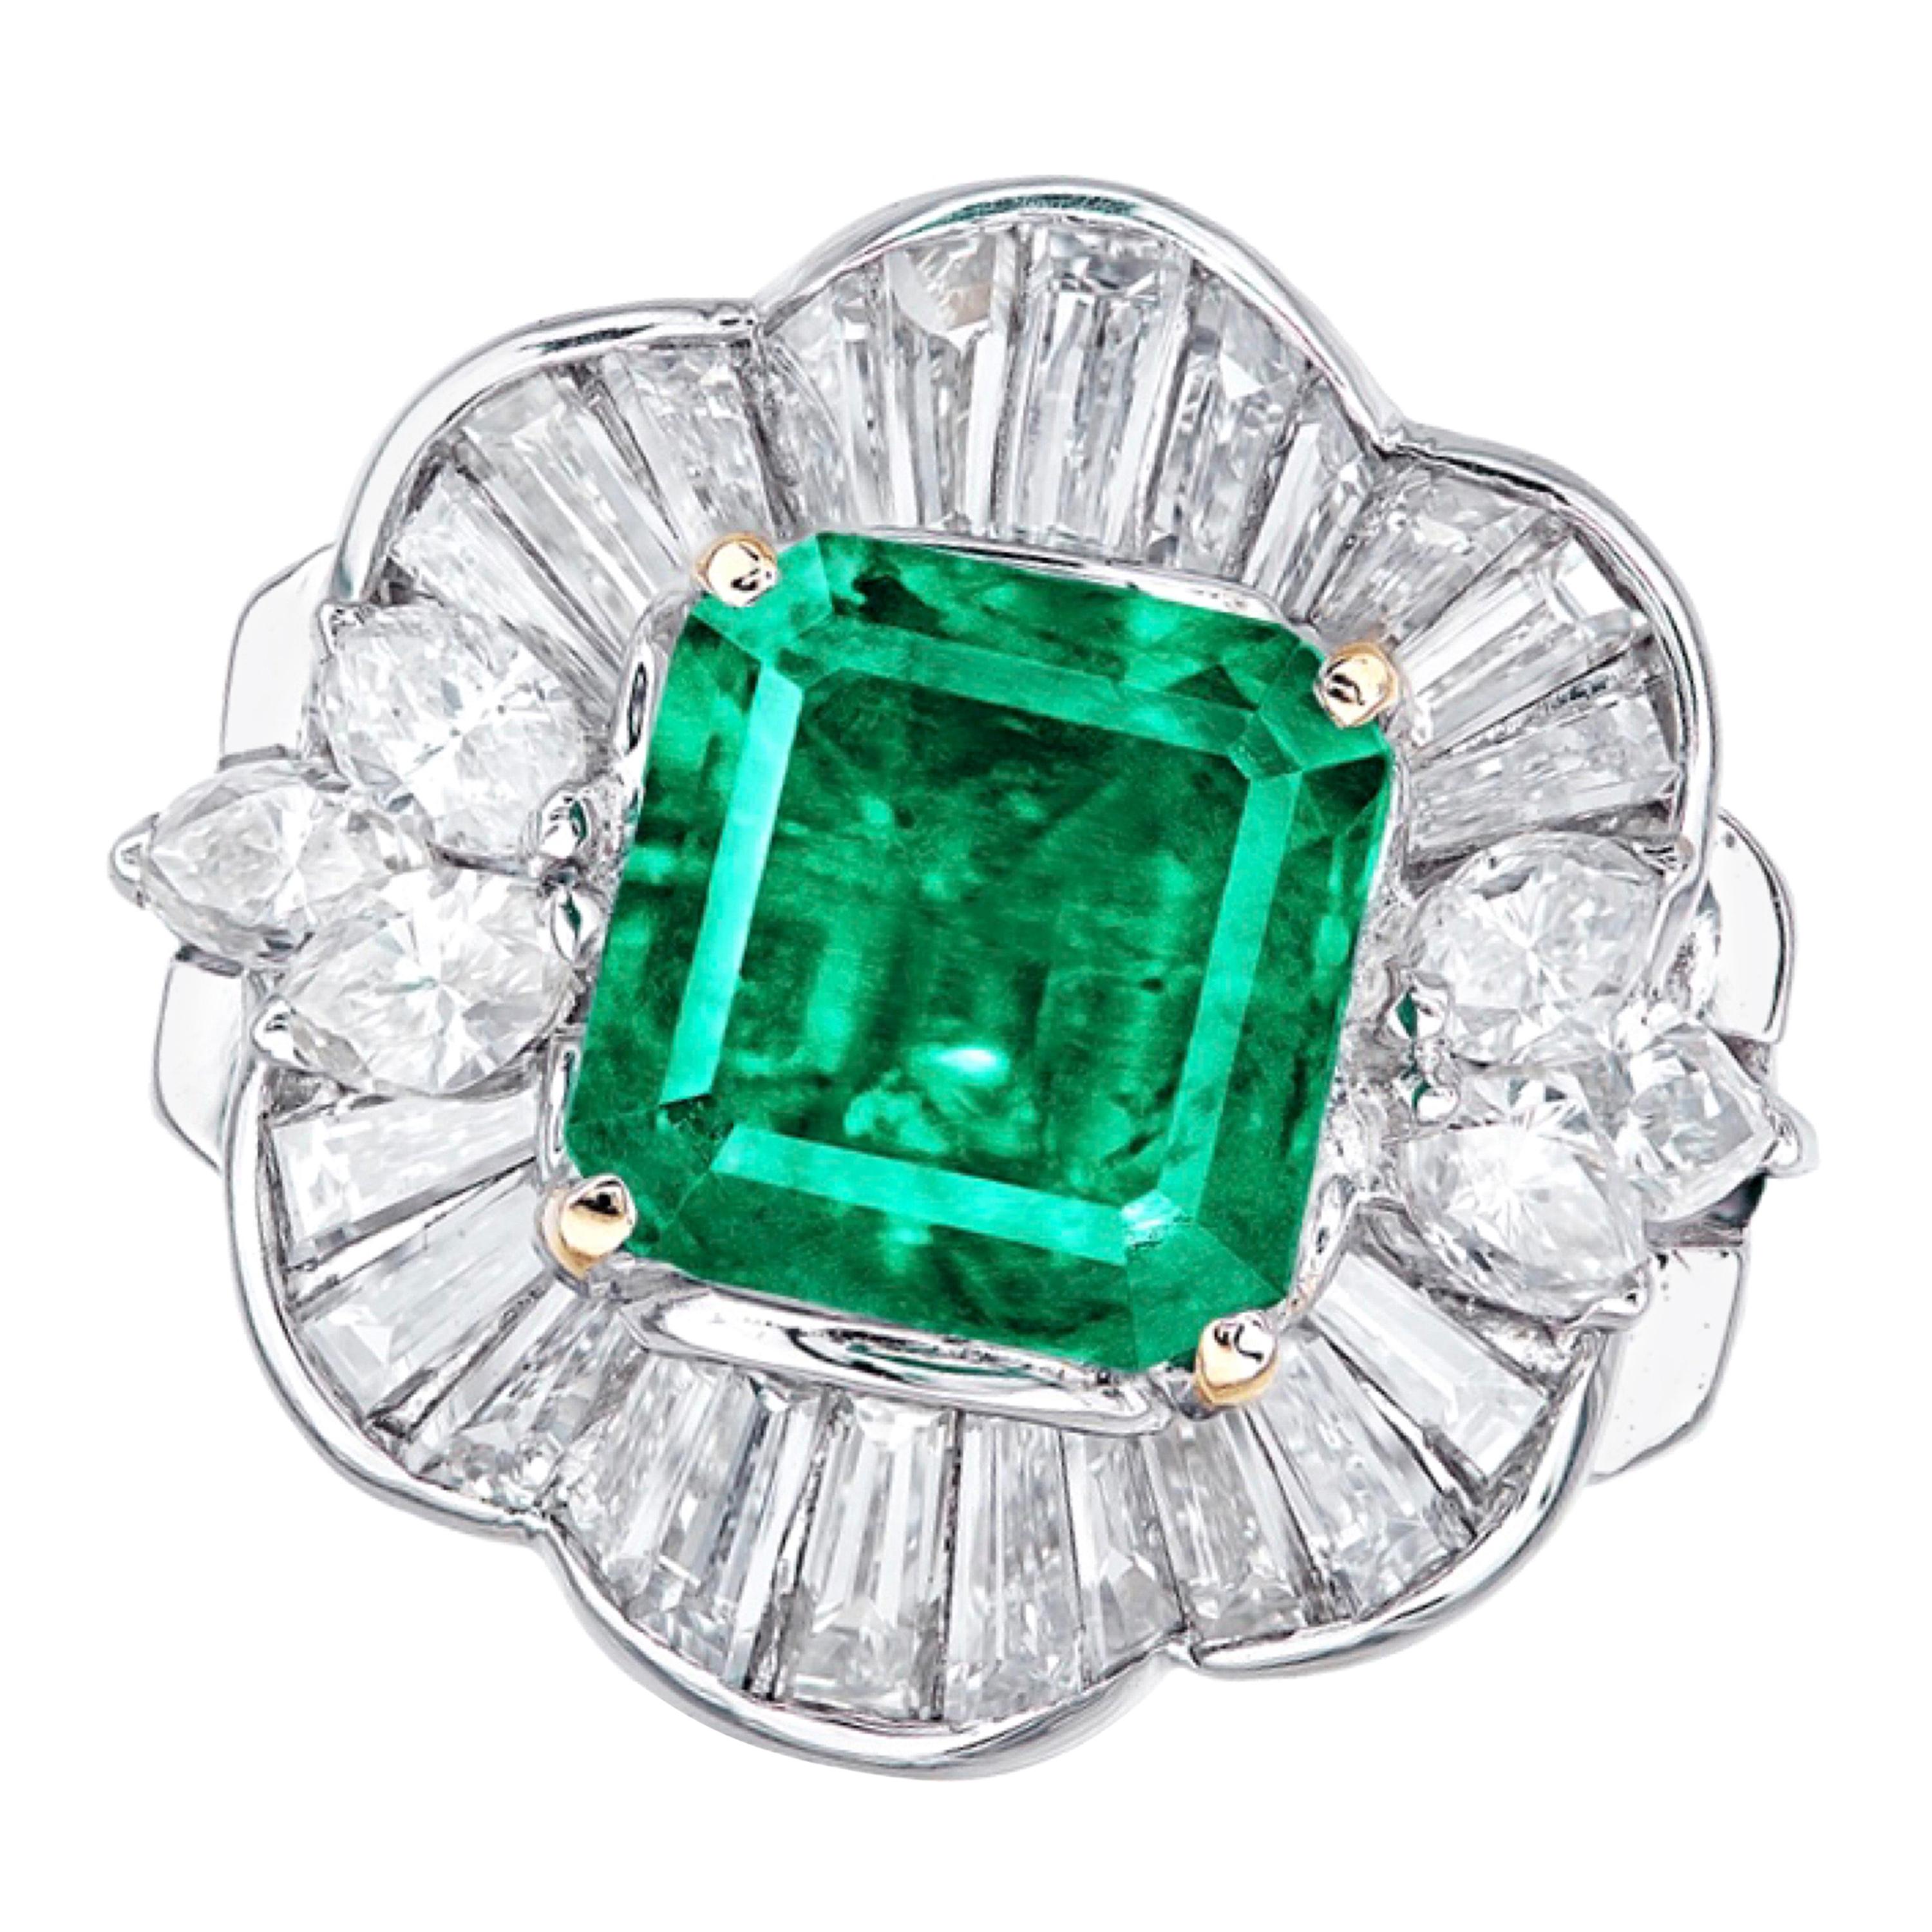 Emilio Jewelry Certified 2.35 Carat Vivid Green Muzo Colombian Emerald Ring